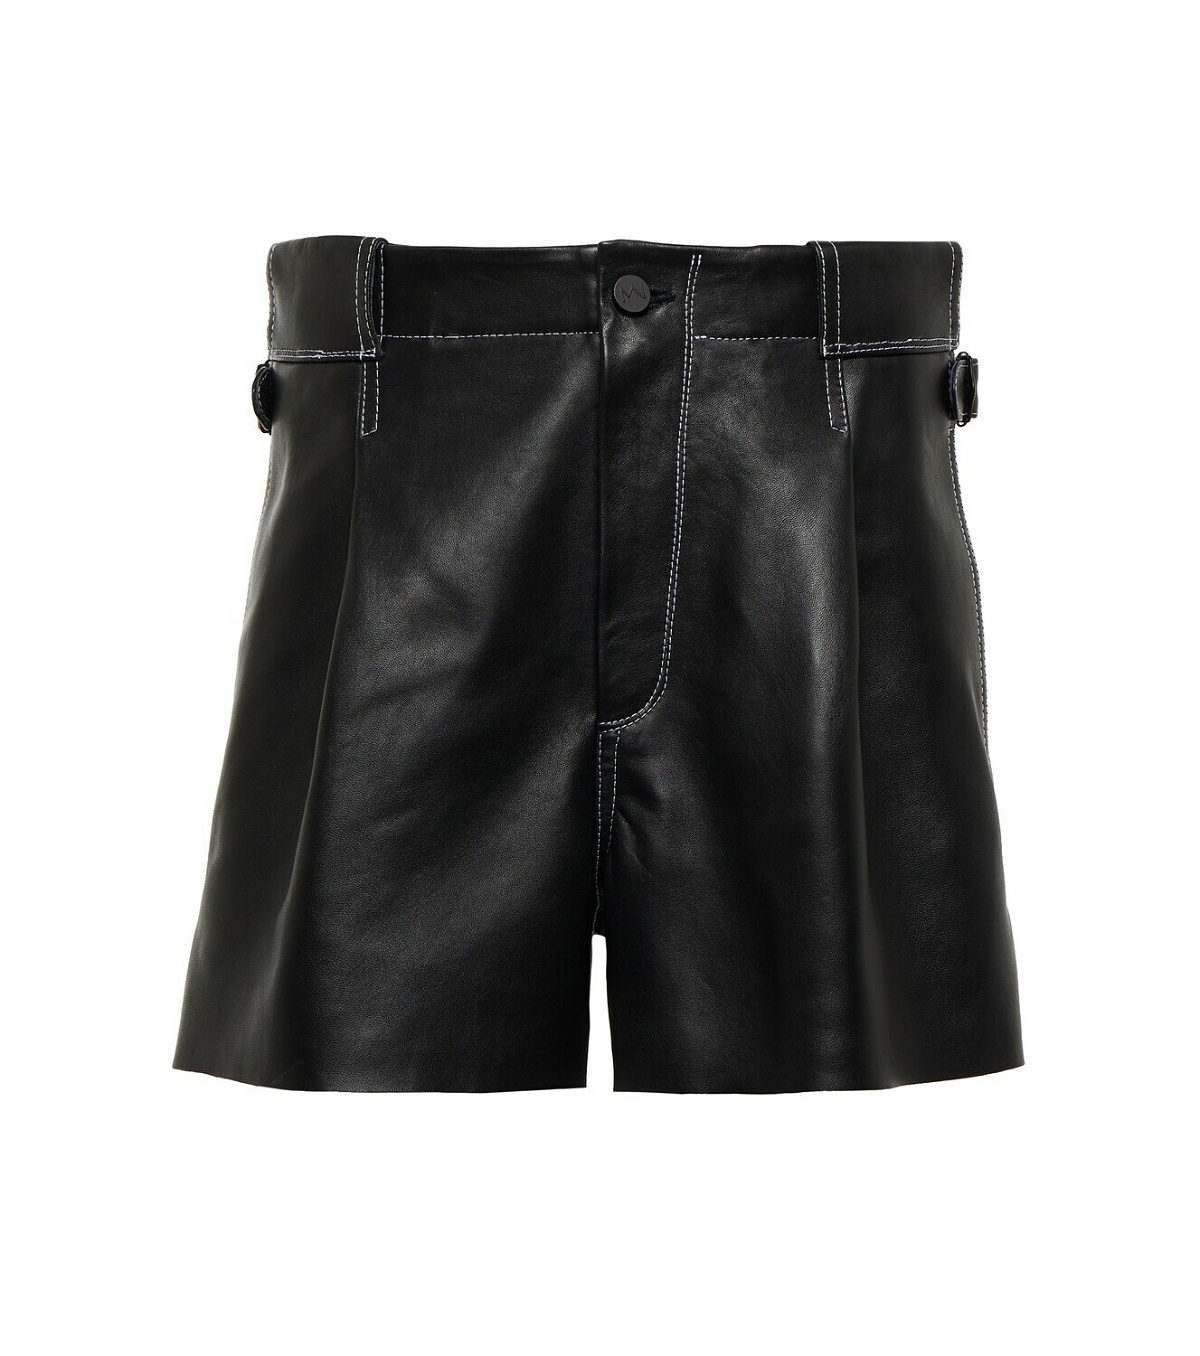 The Mannei Sakib leather shorts